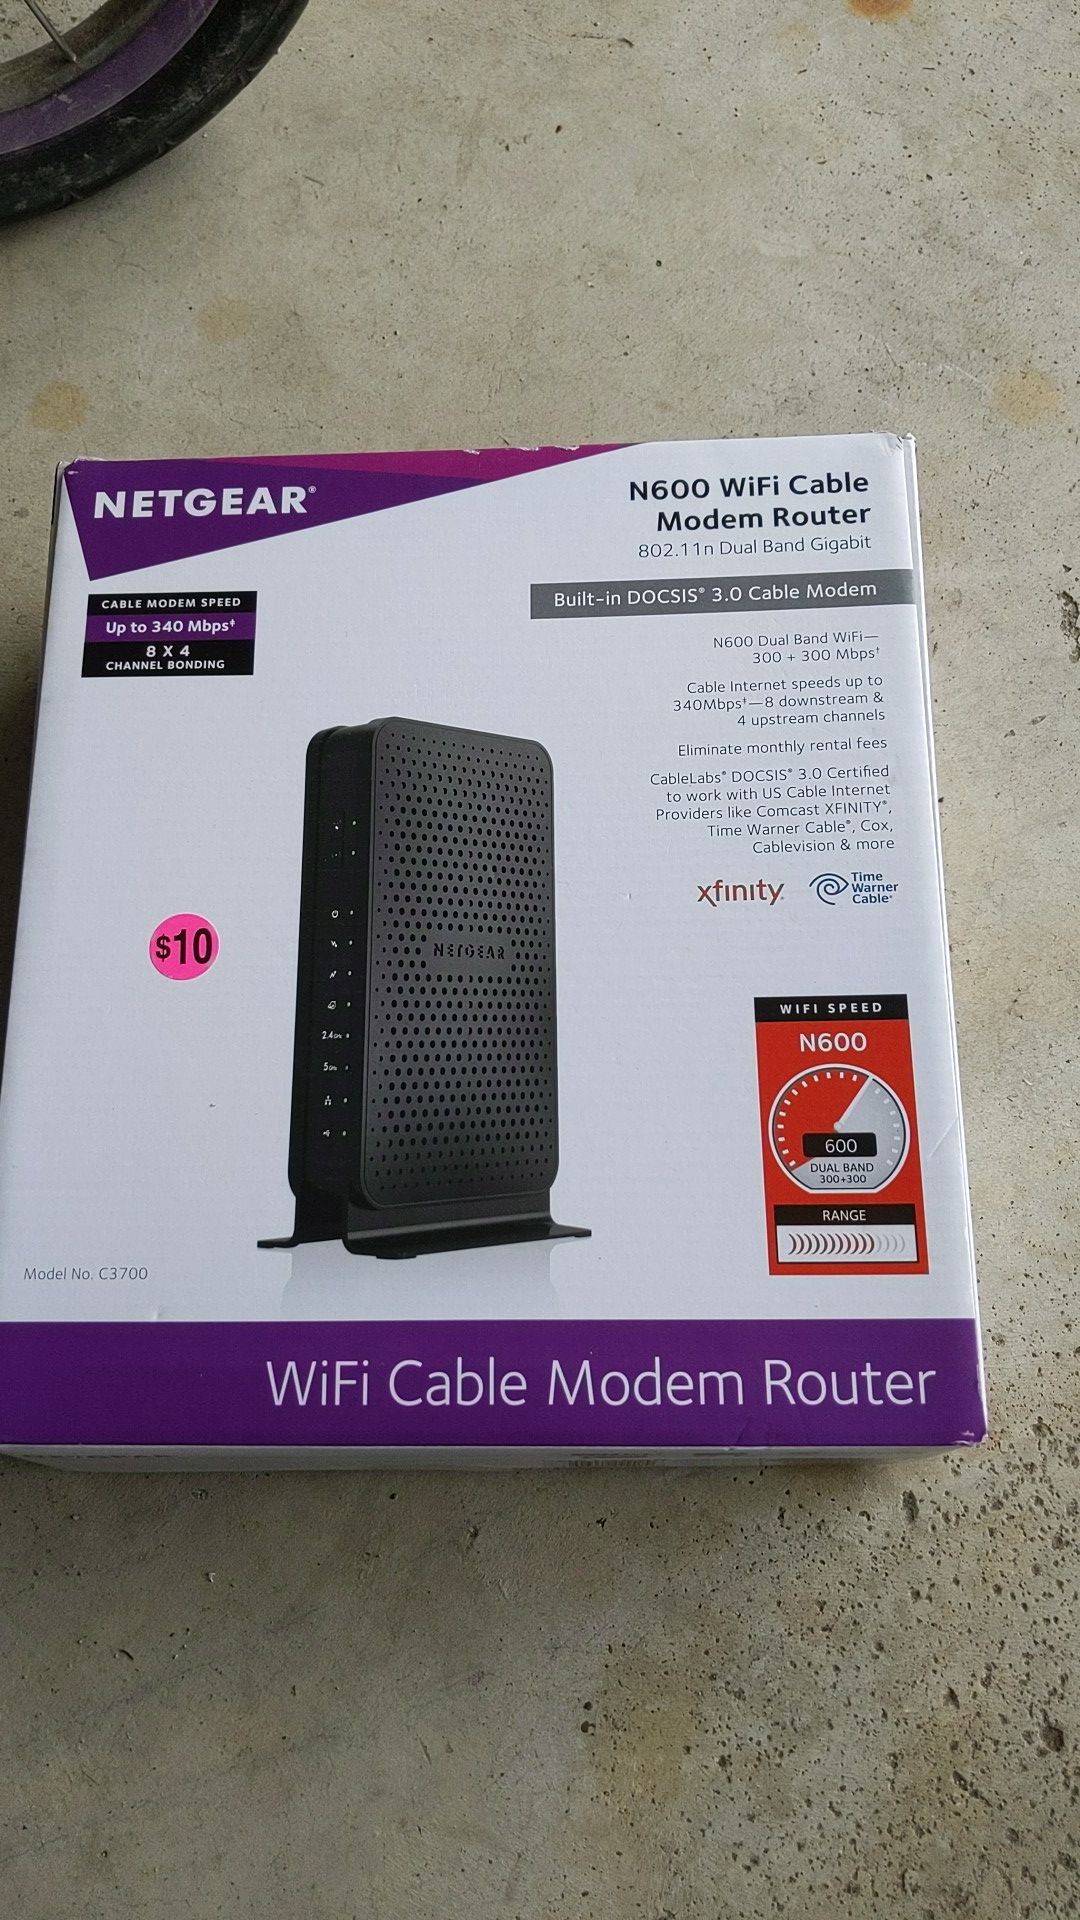 Neatgear WiFi cable modem